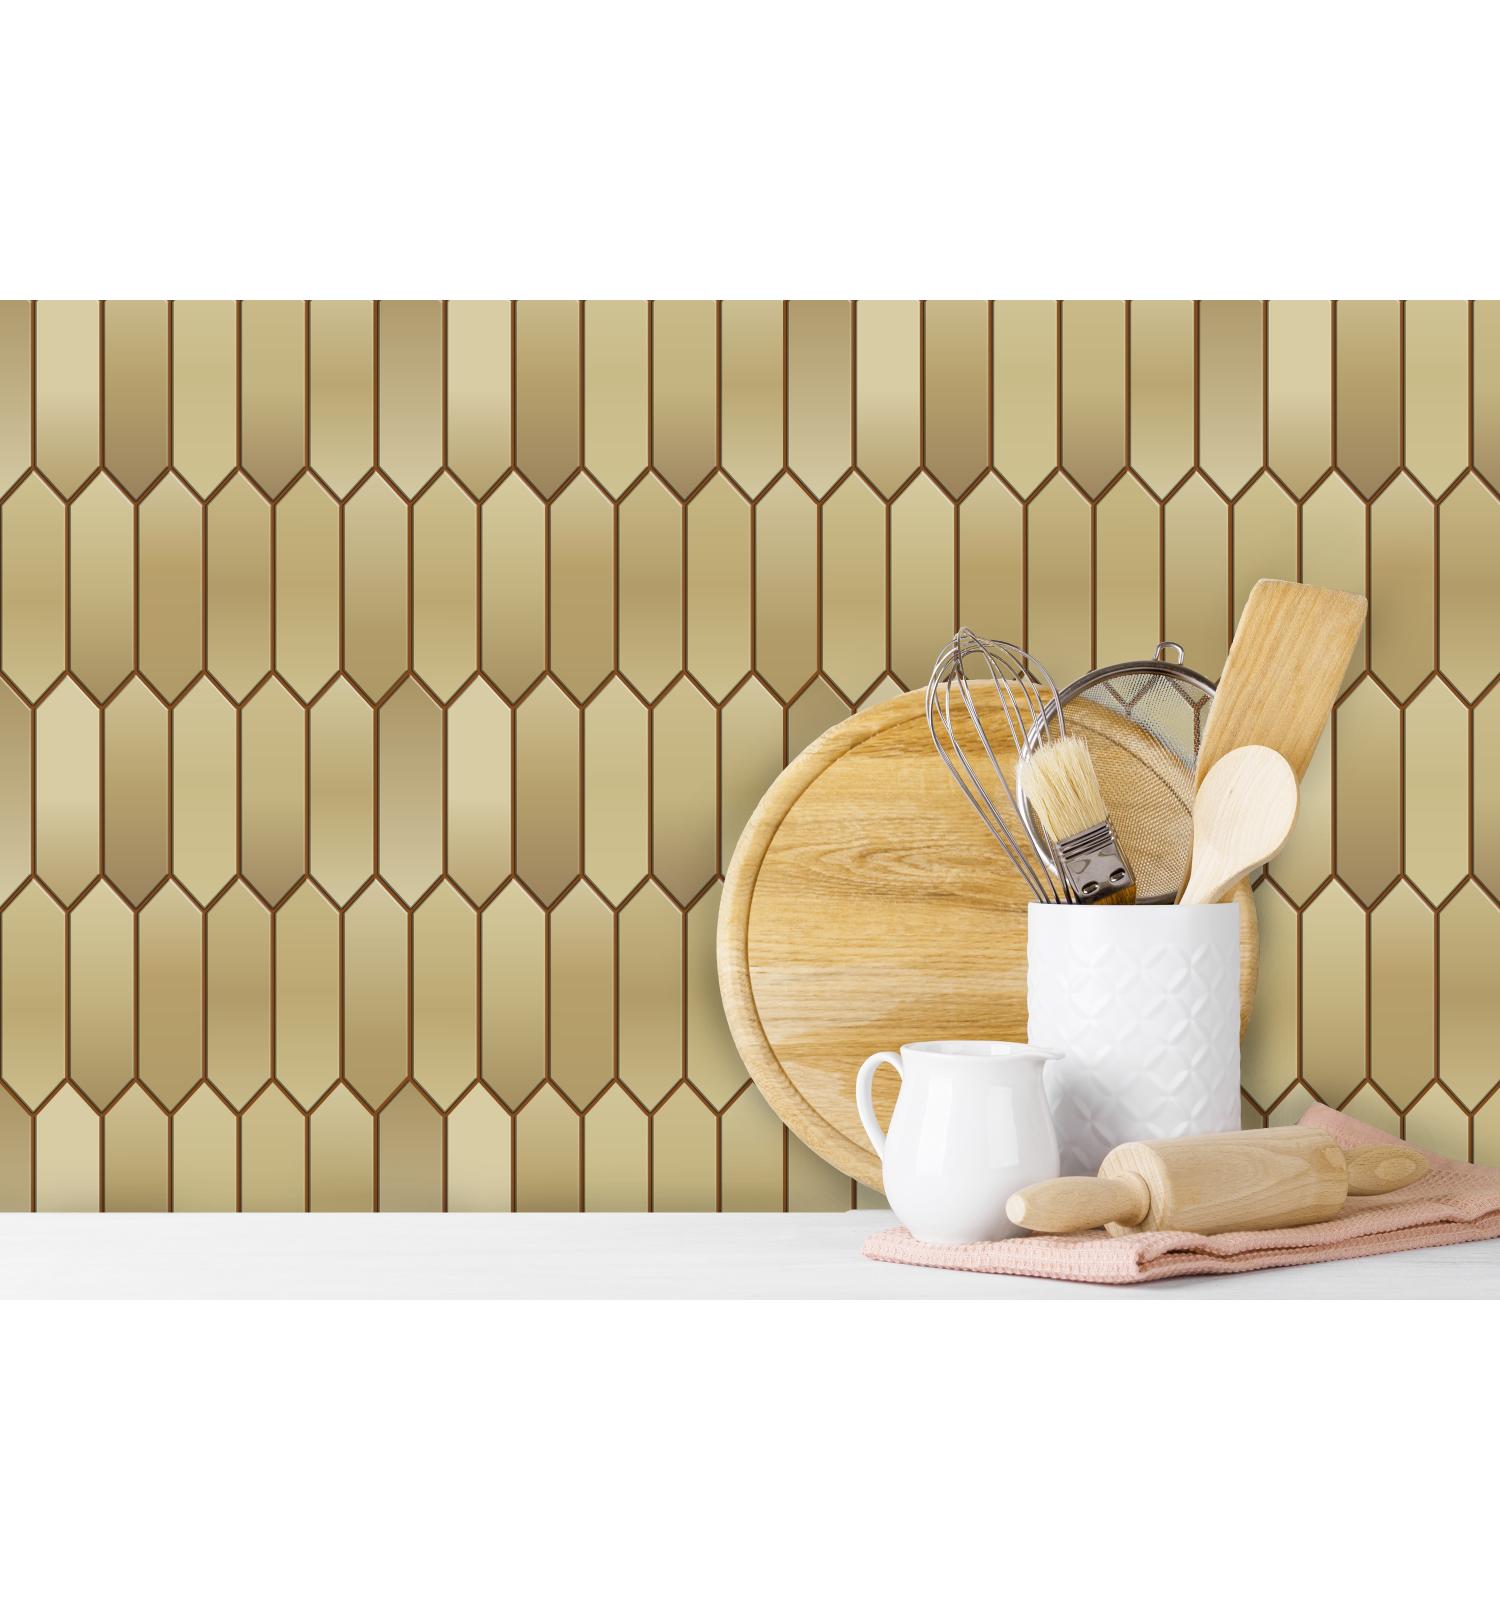 3D Peel and Stick Tiles | self Adhesive Peel & Stick Backsplash tiles for Home Décor